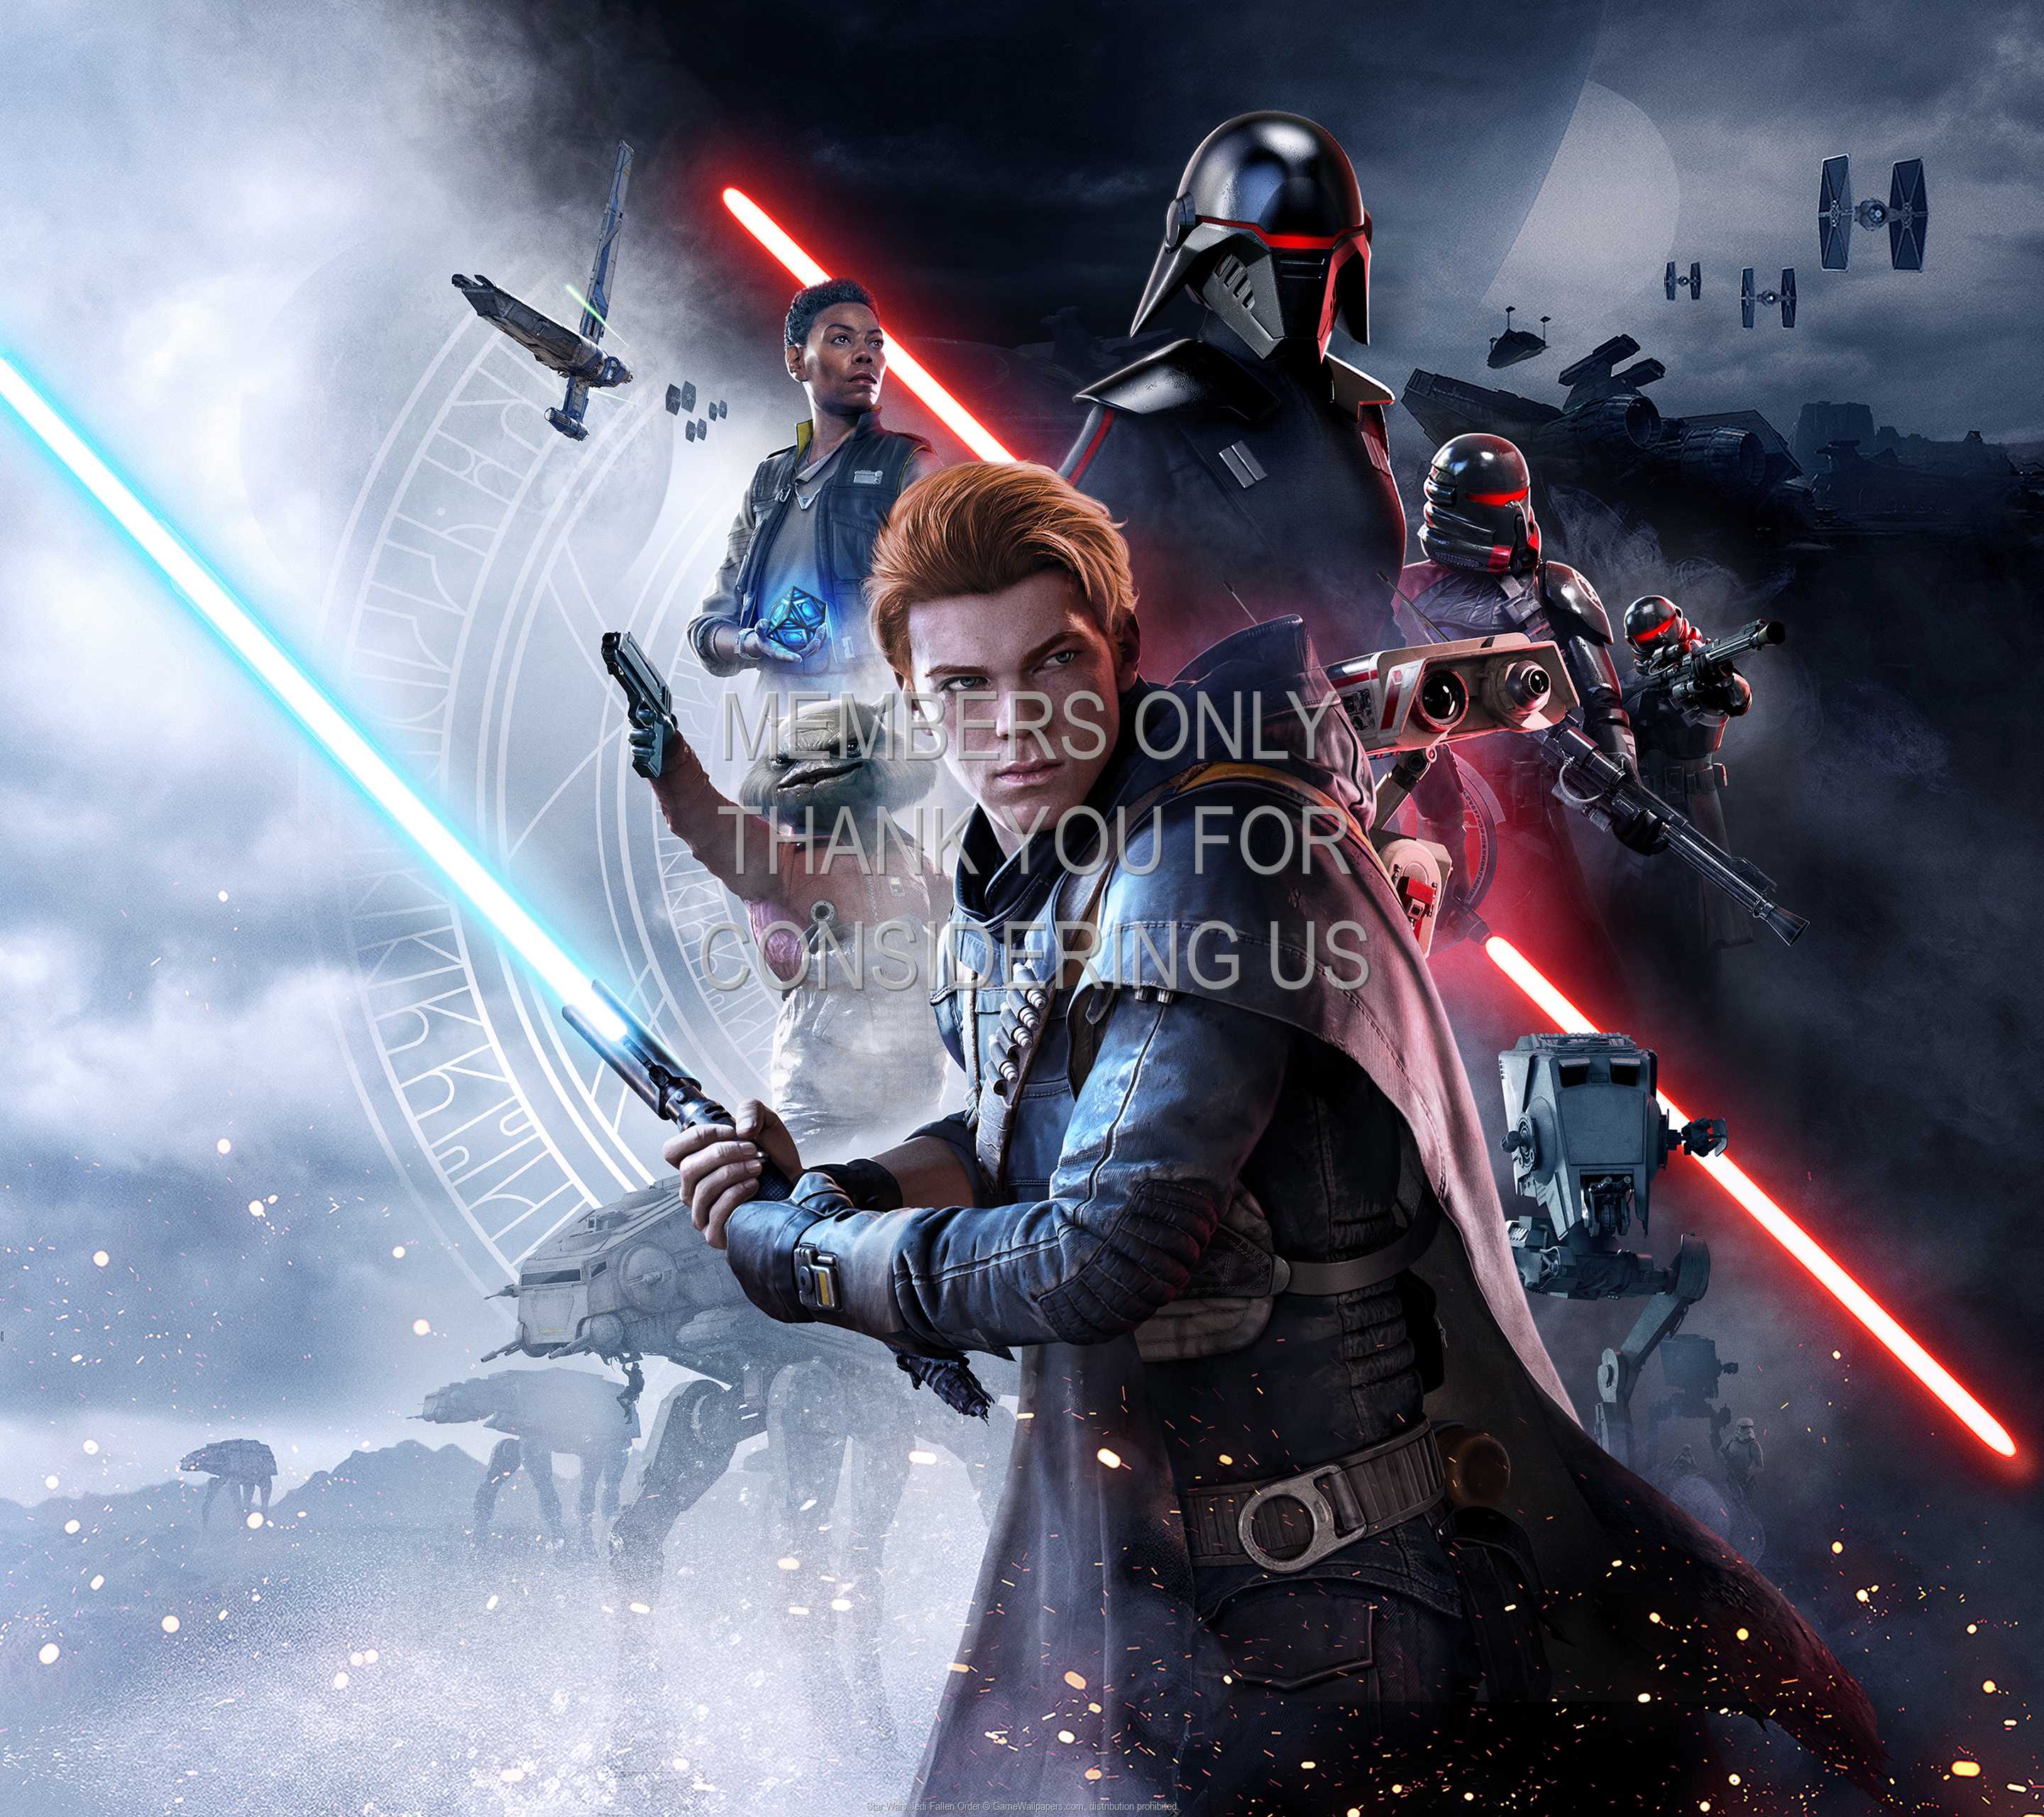 Star Wars Jedi: Fallen Order 1440p Horizontal Mobile wallpaper or background 03